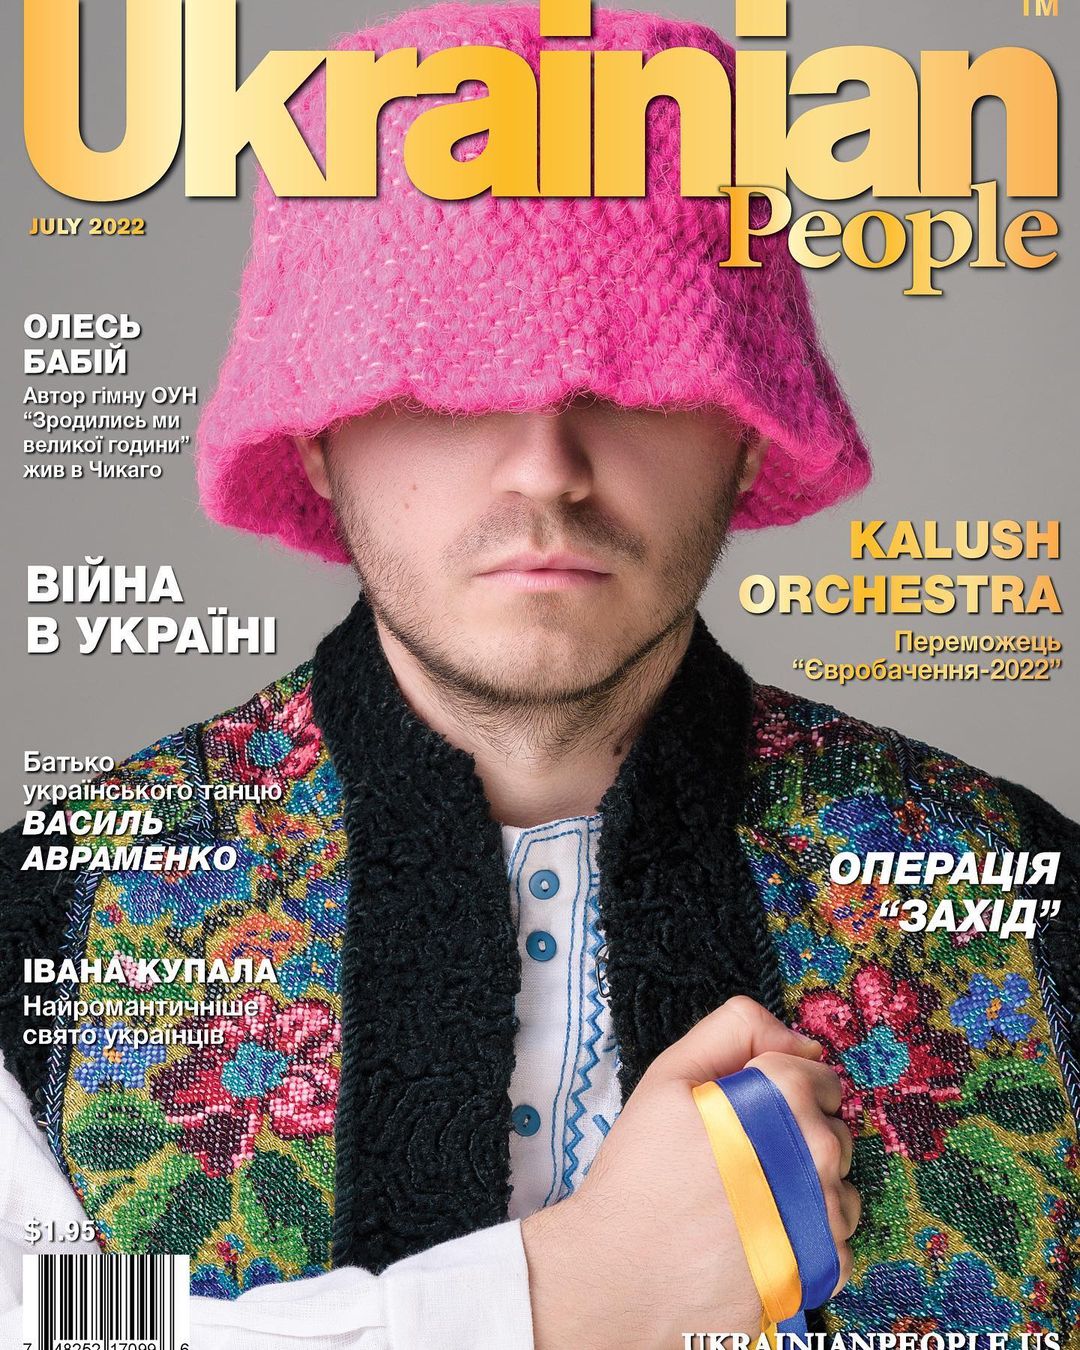 Фронтмен группы Kalush Orchestra украсил обложку журнала Ukrainian People